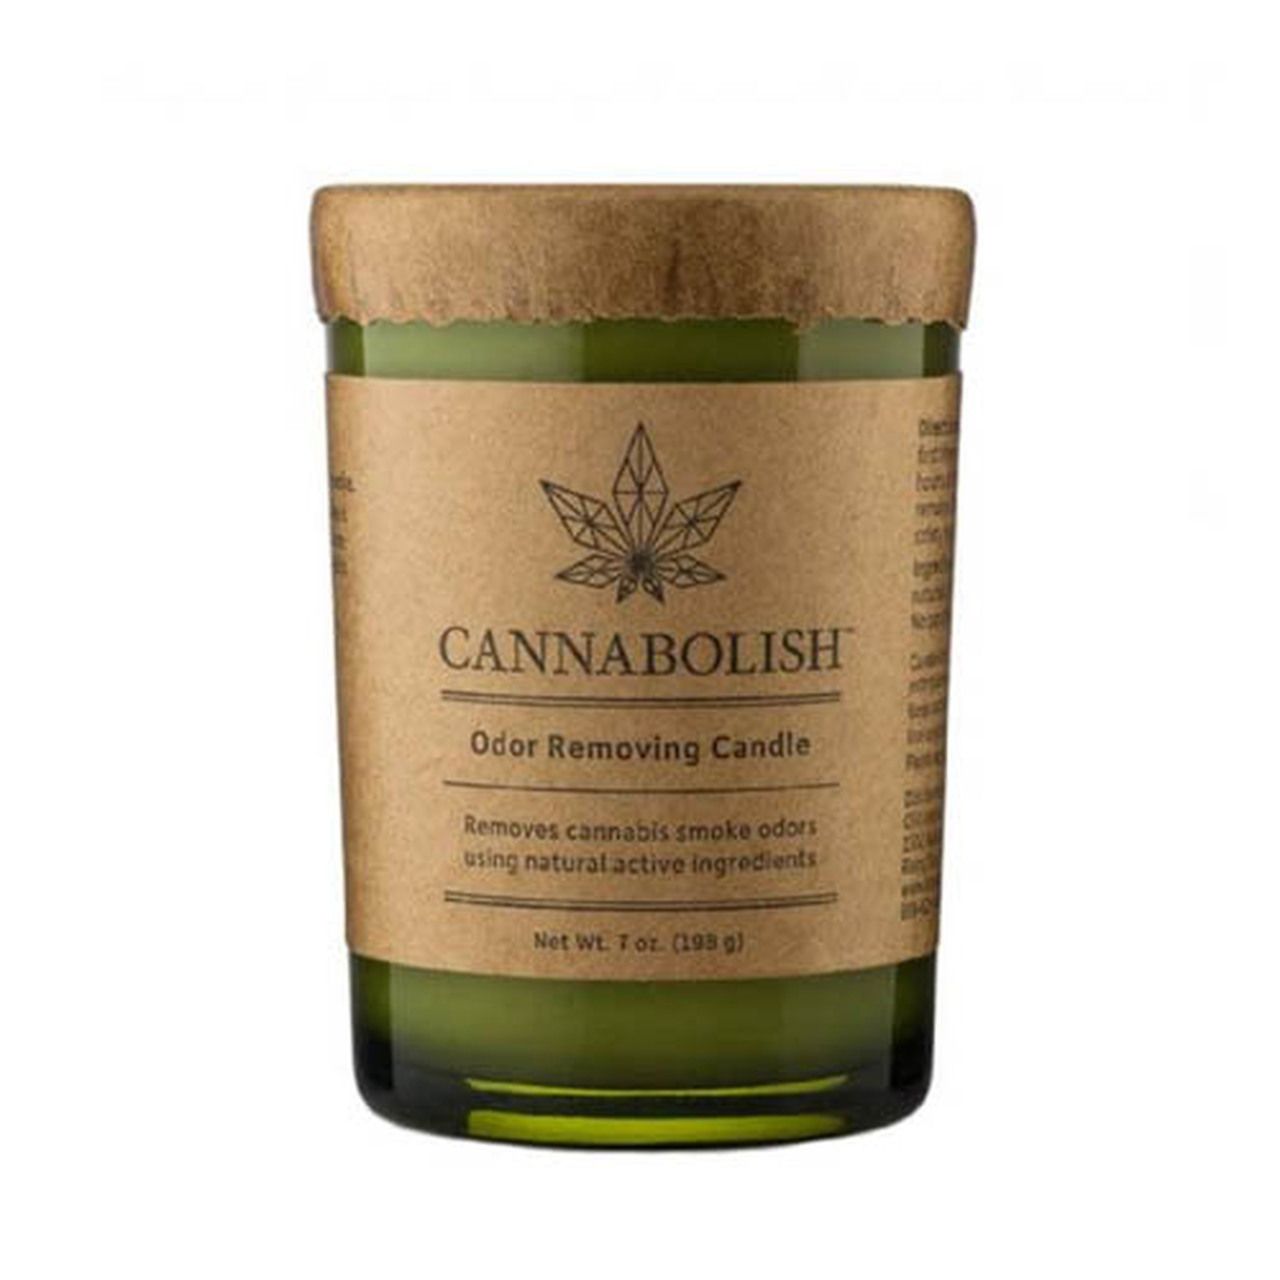 Cannabolish Candle Odor Removing